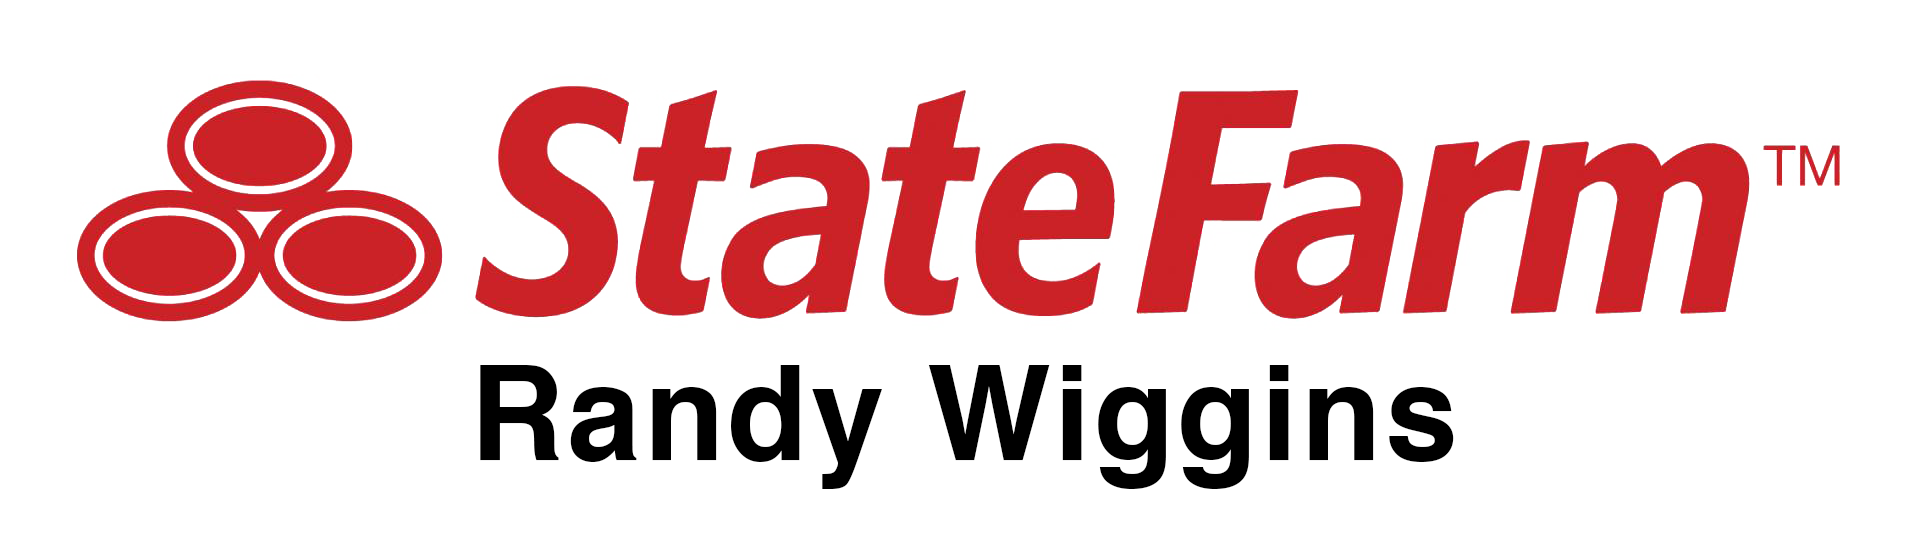 State-Farm-logo-randy-wiggins